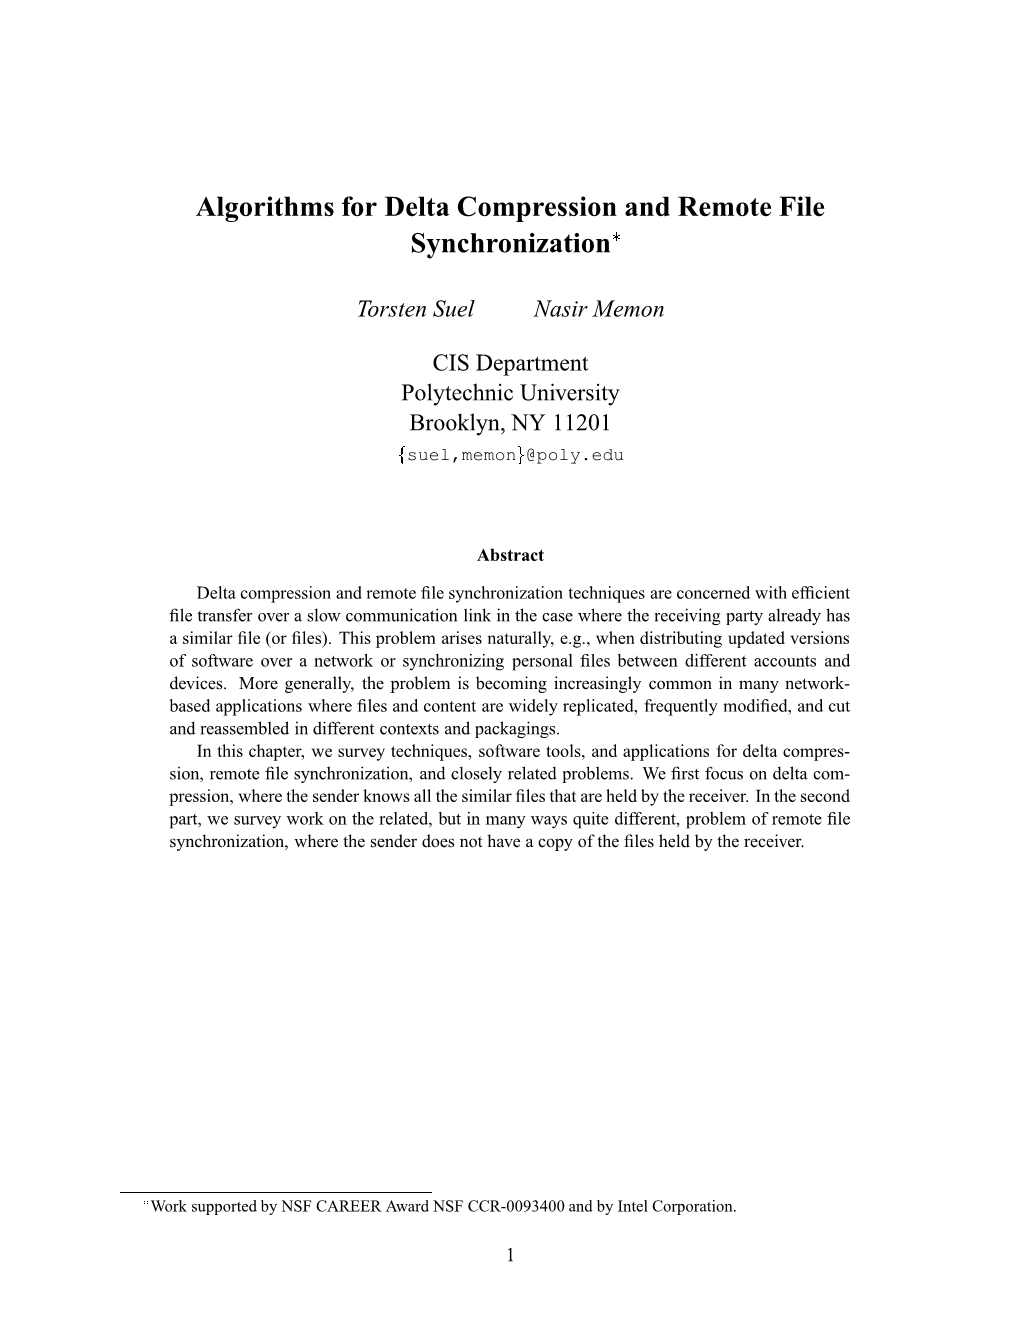 Algorithms for Delta Compression and Remote File Synchronization